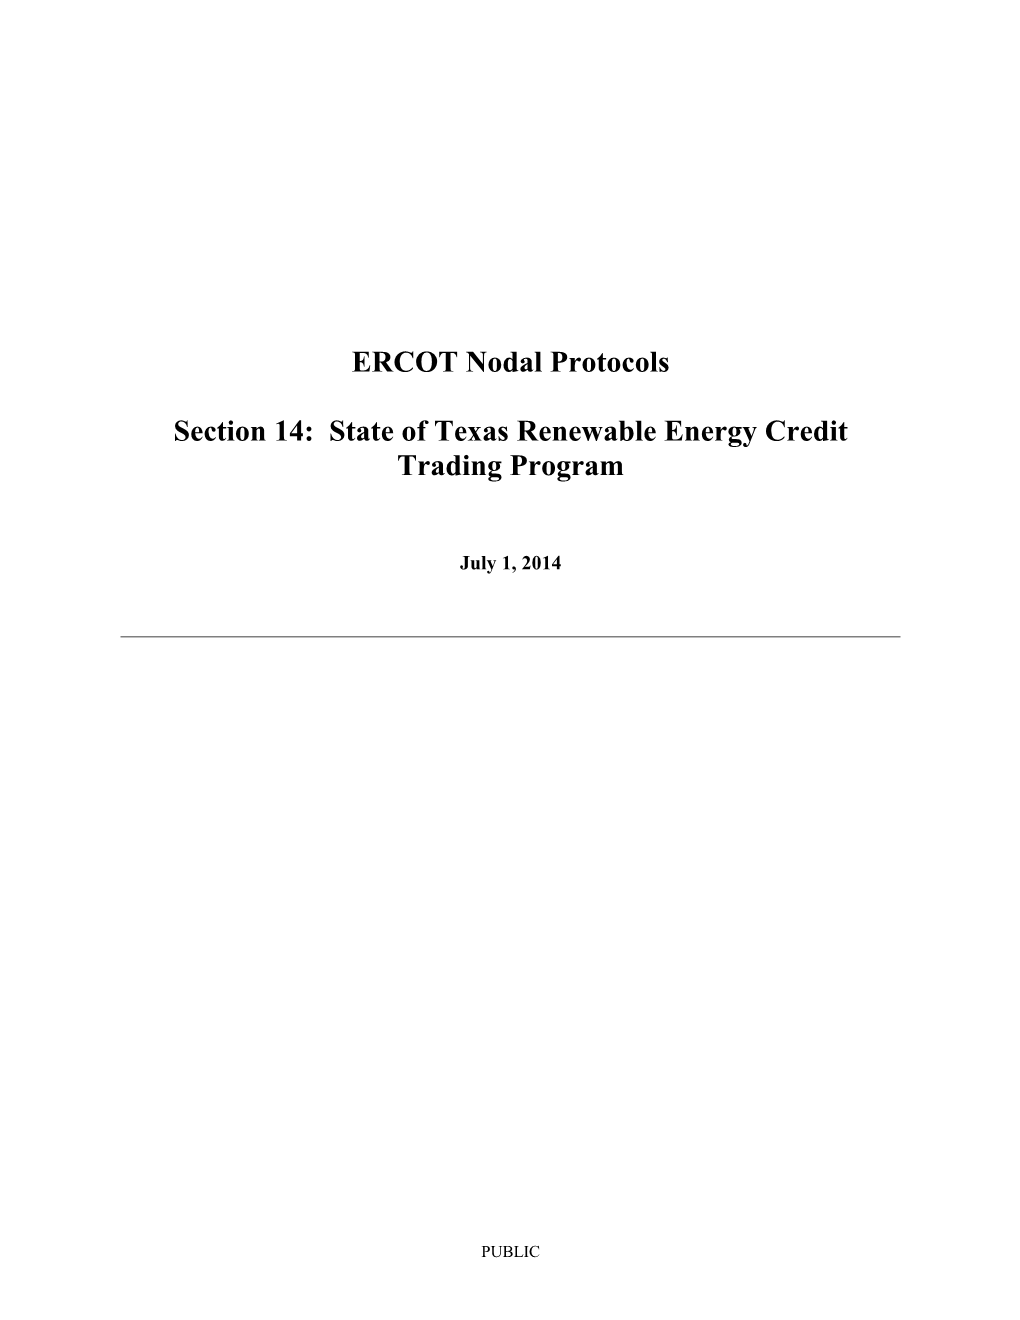 Section 14: State of Texasrenewable Energy Credit Trading Program